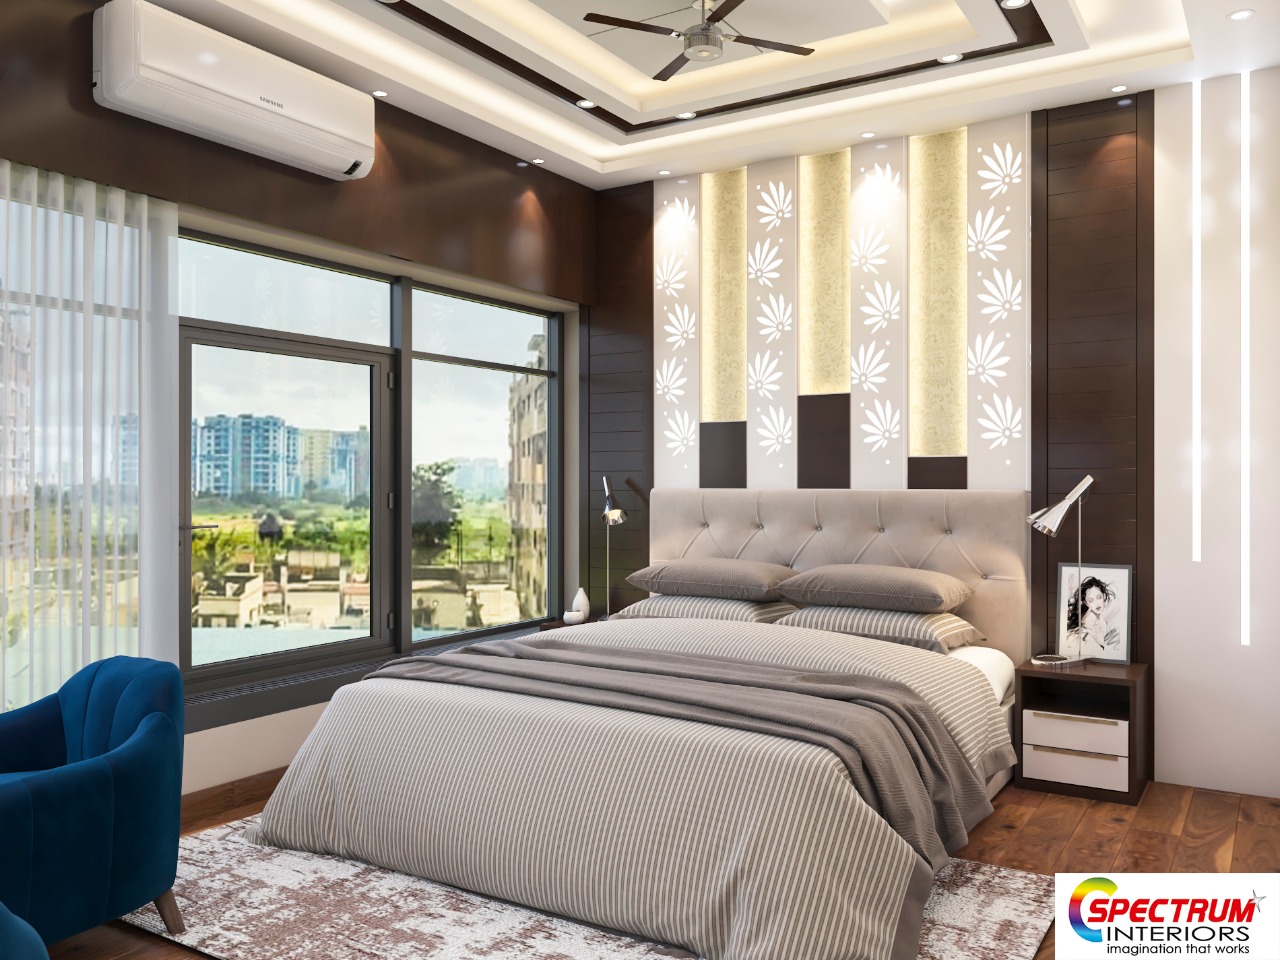 Aggregate 150+ bedroom interior design bangalore